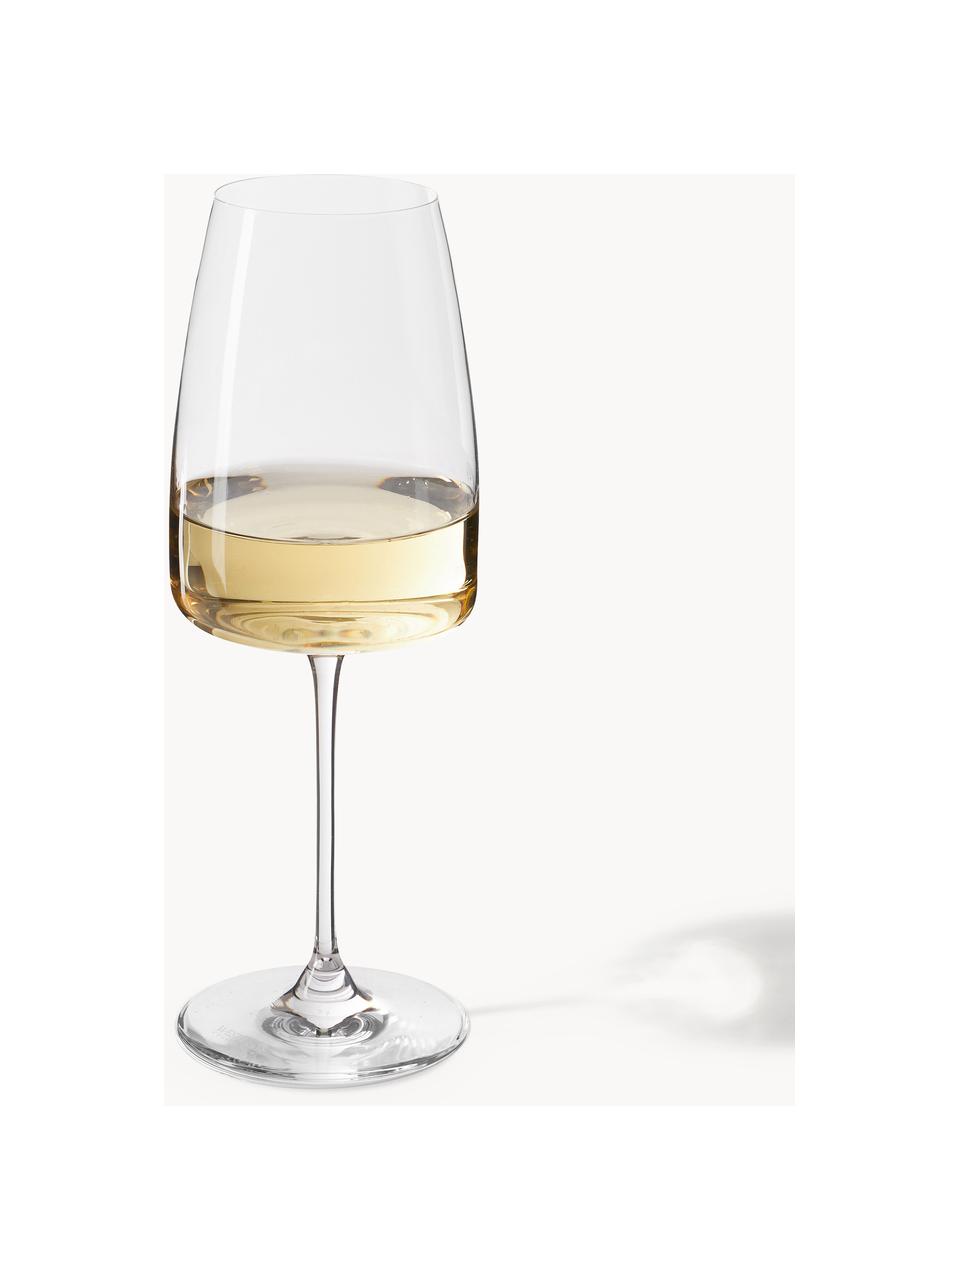 Witte wijnglazen Lucien van kristalglas, 4 stuks, Kristalglas, Transparant, Ø 8 x H 22 cm, 420 ml